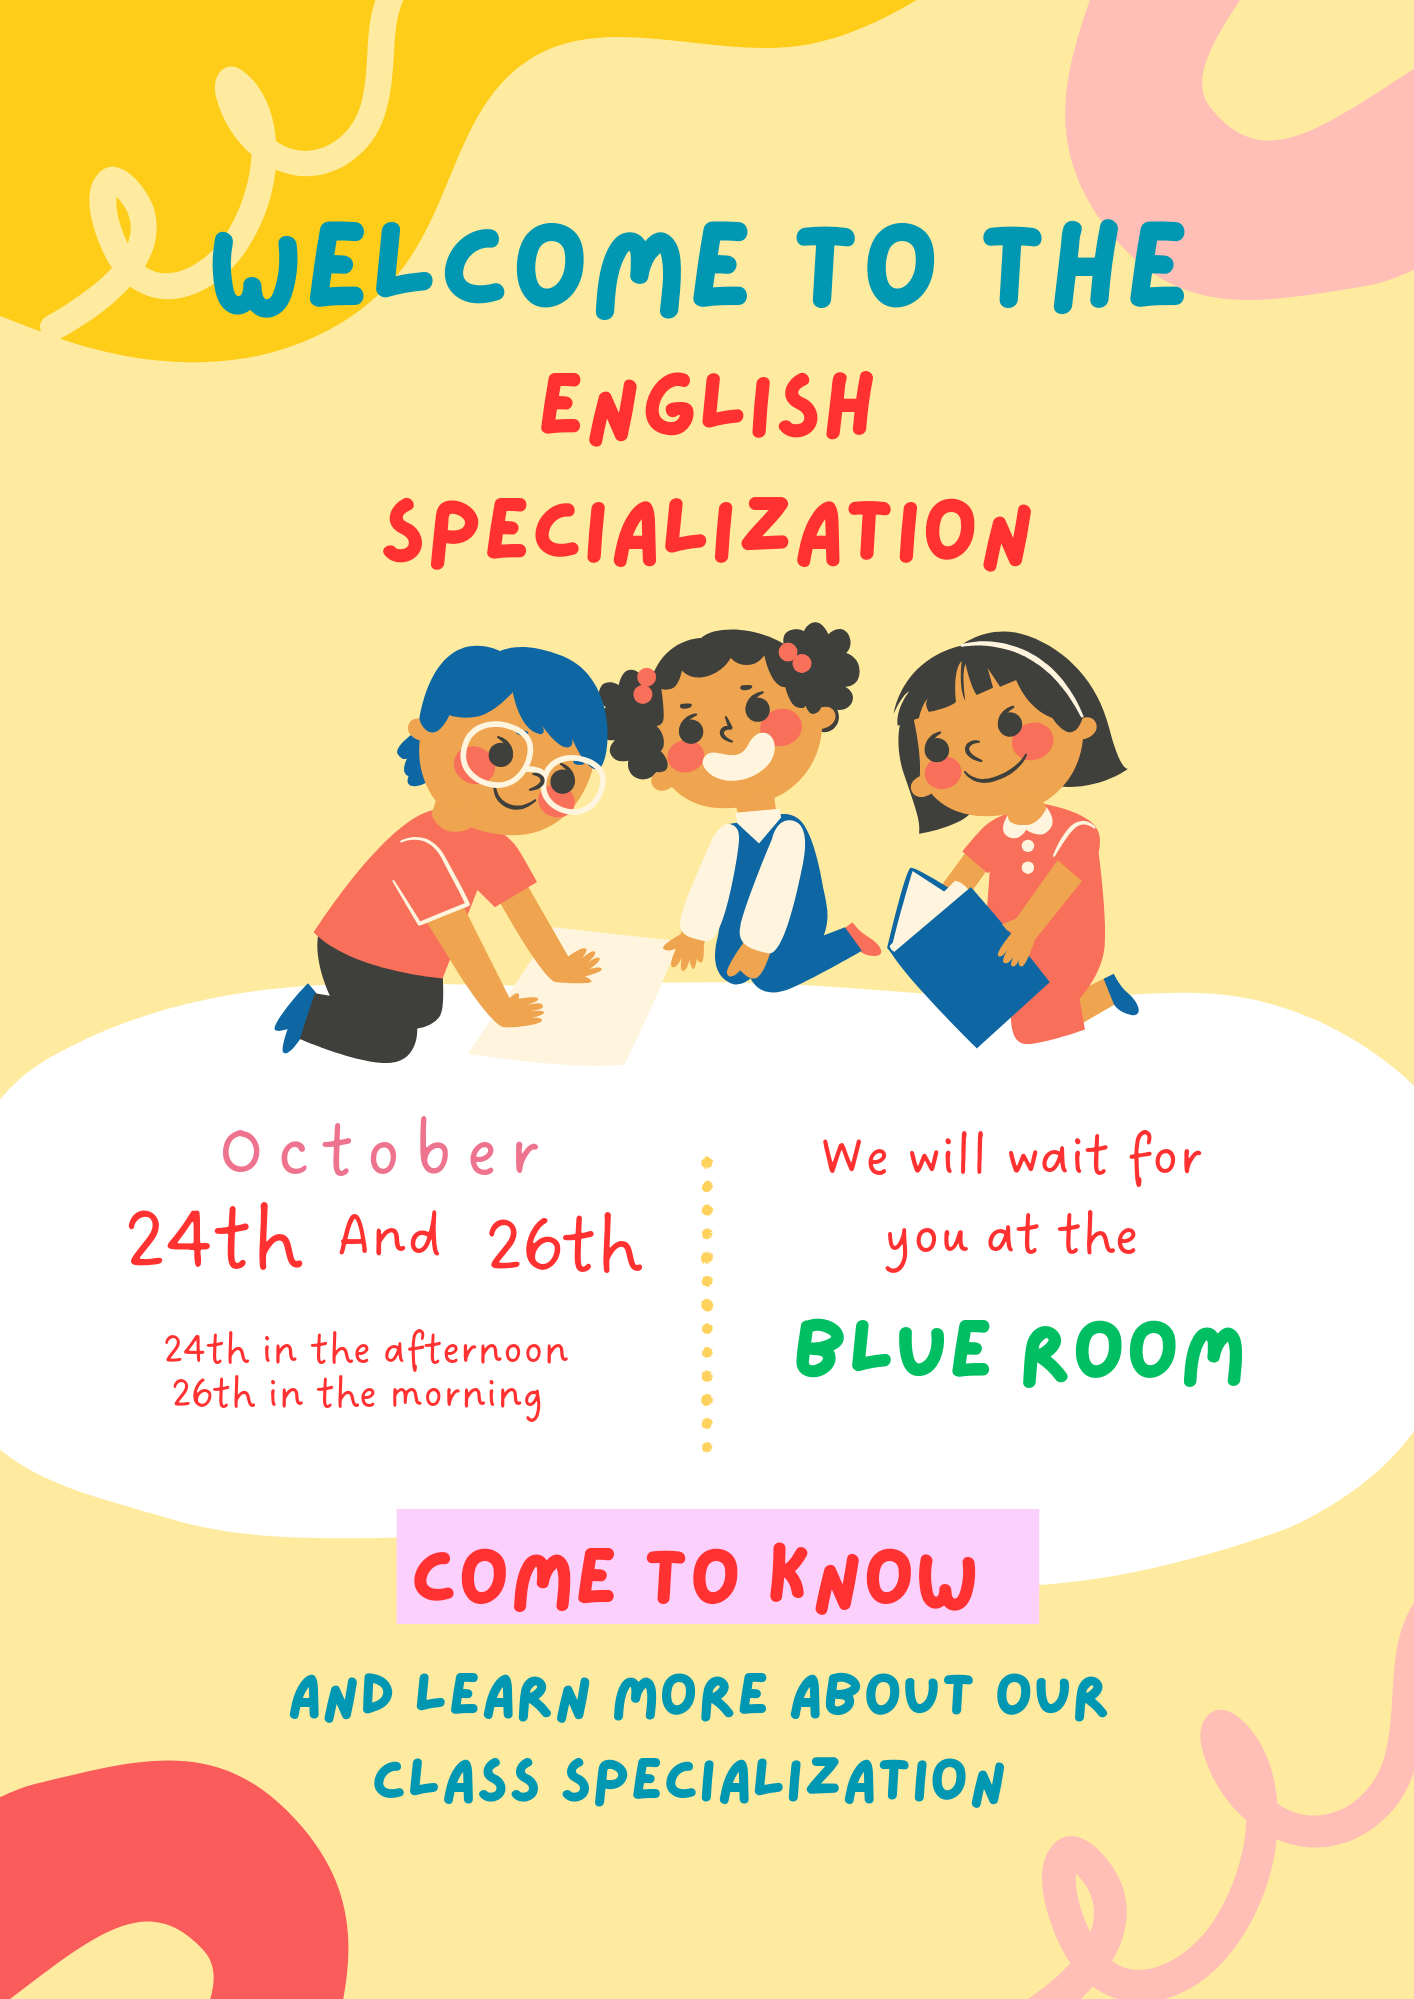 English specialization